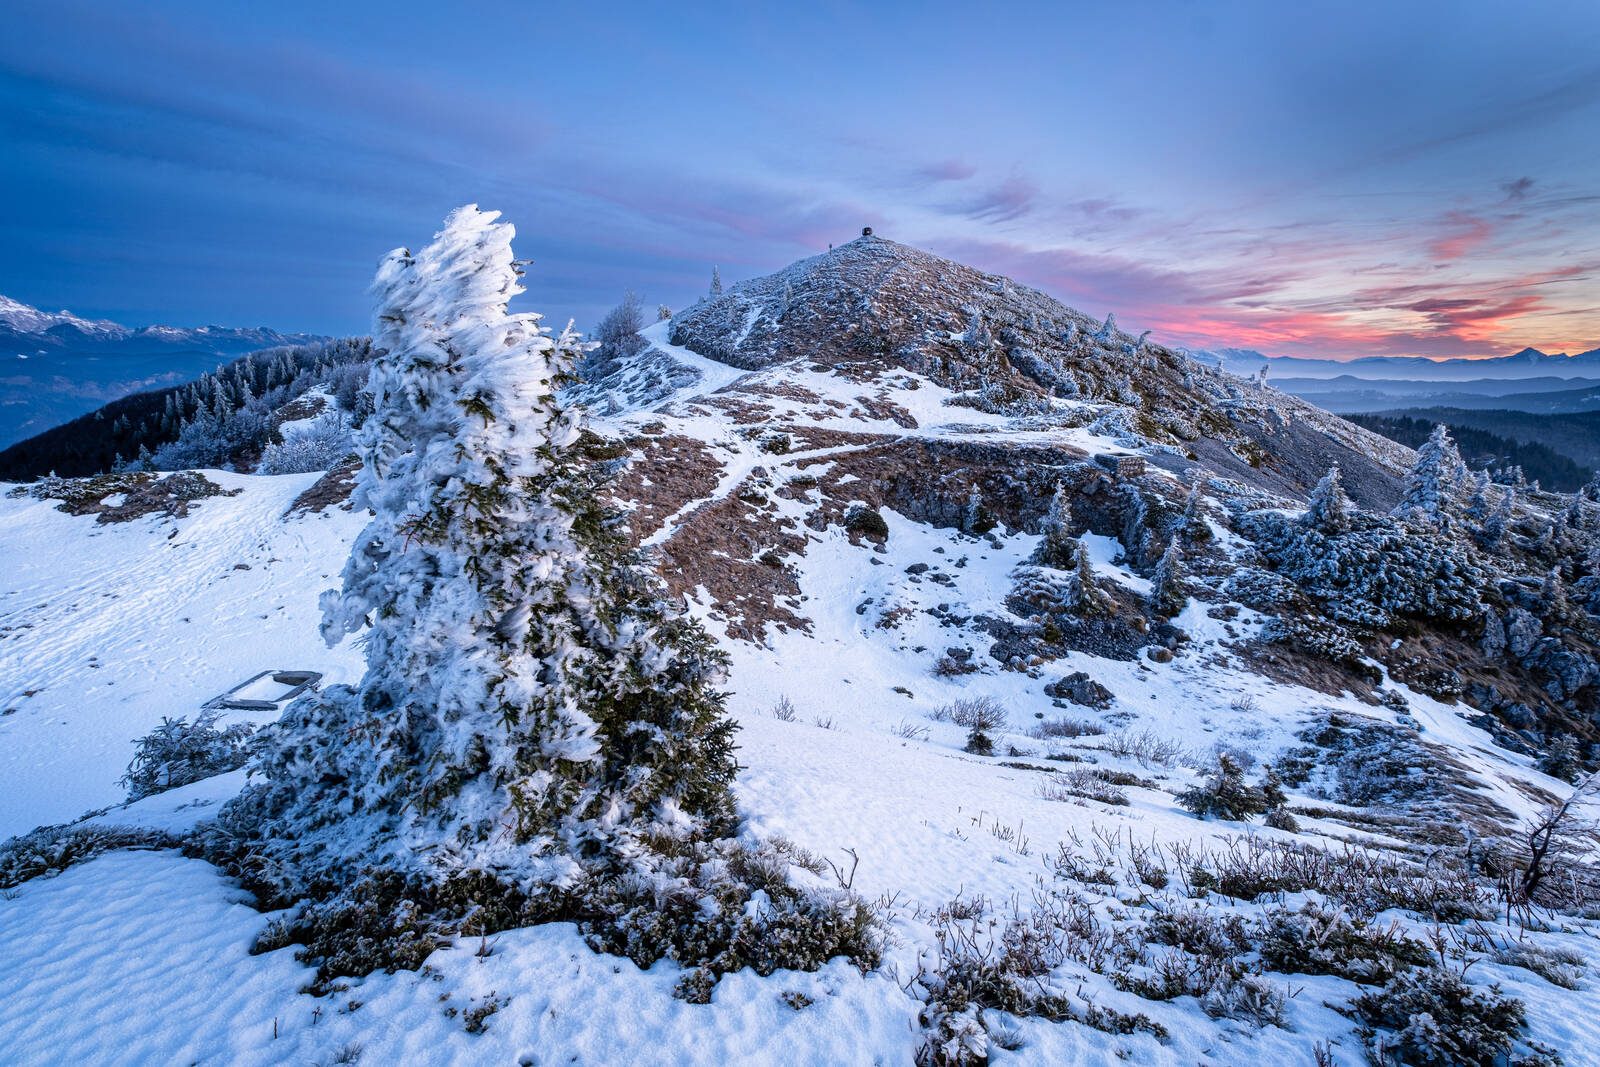 Image of Peaks of Soriška Planina by Erazem Dolžan